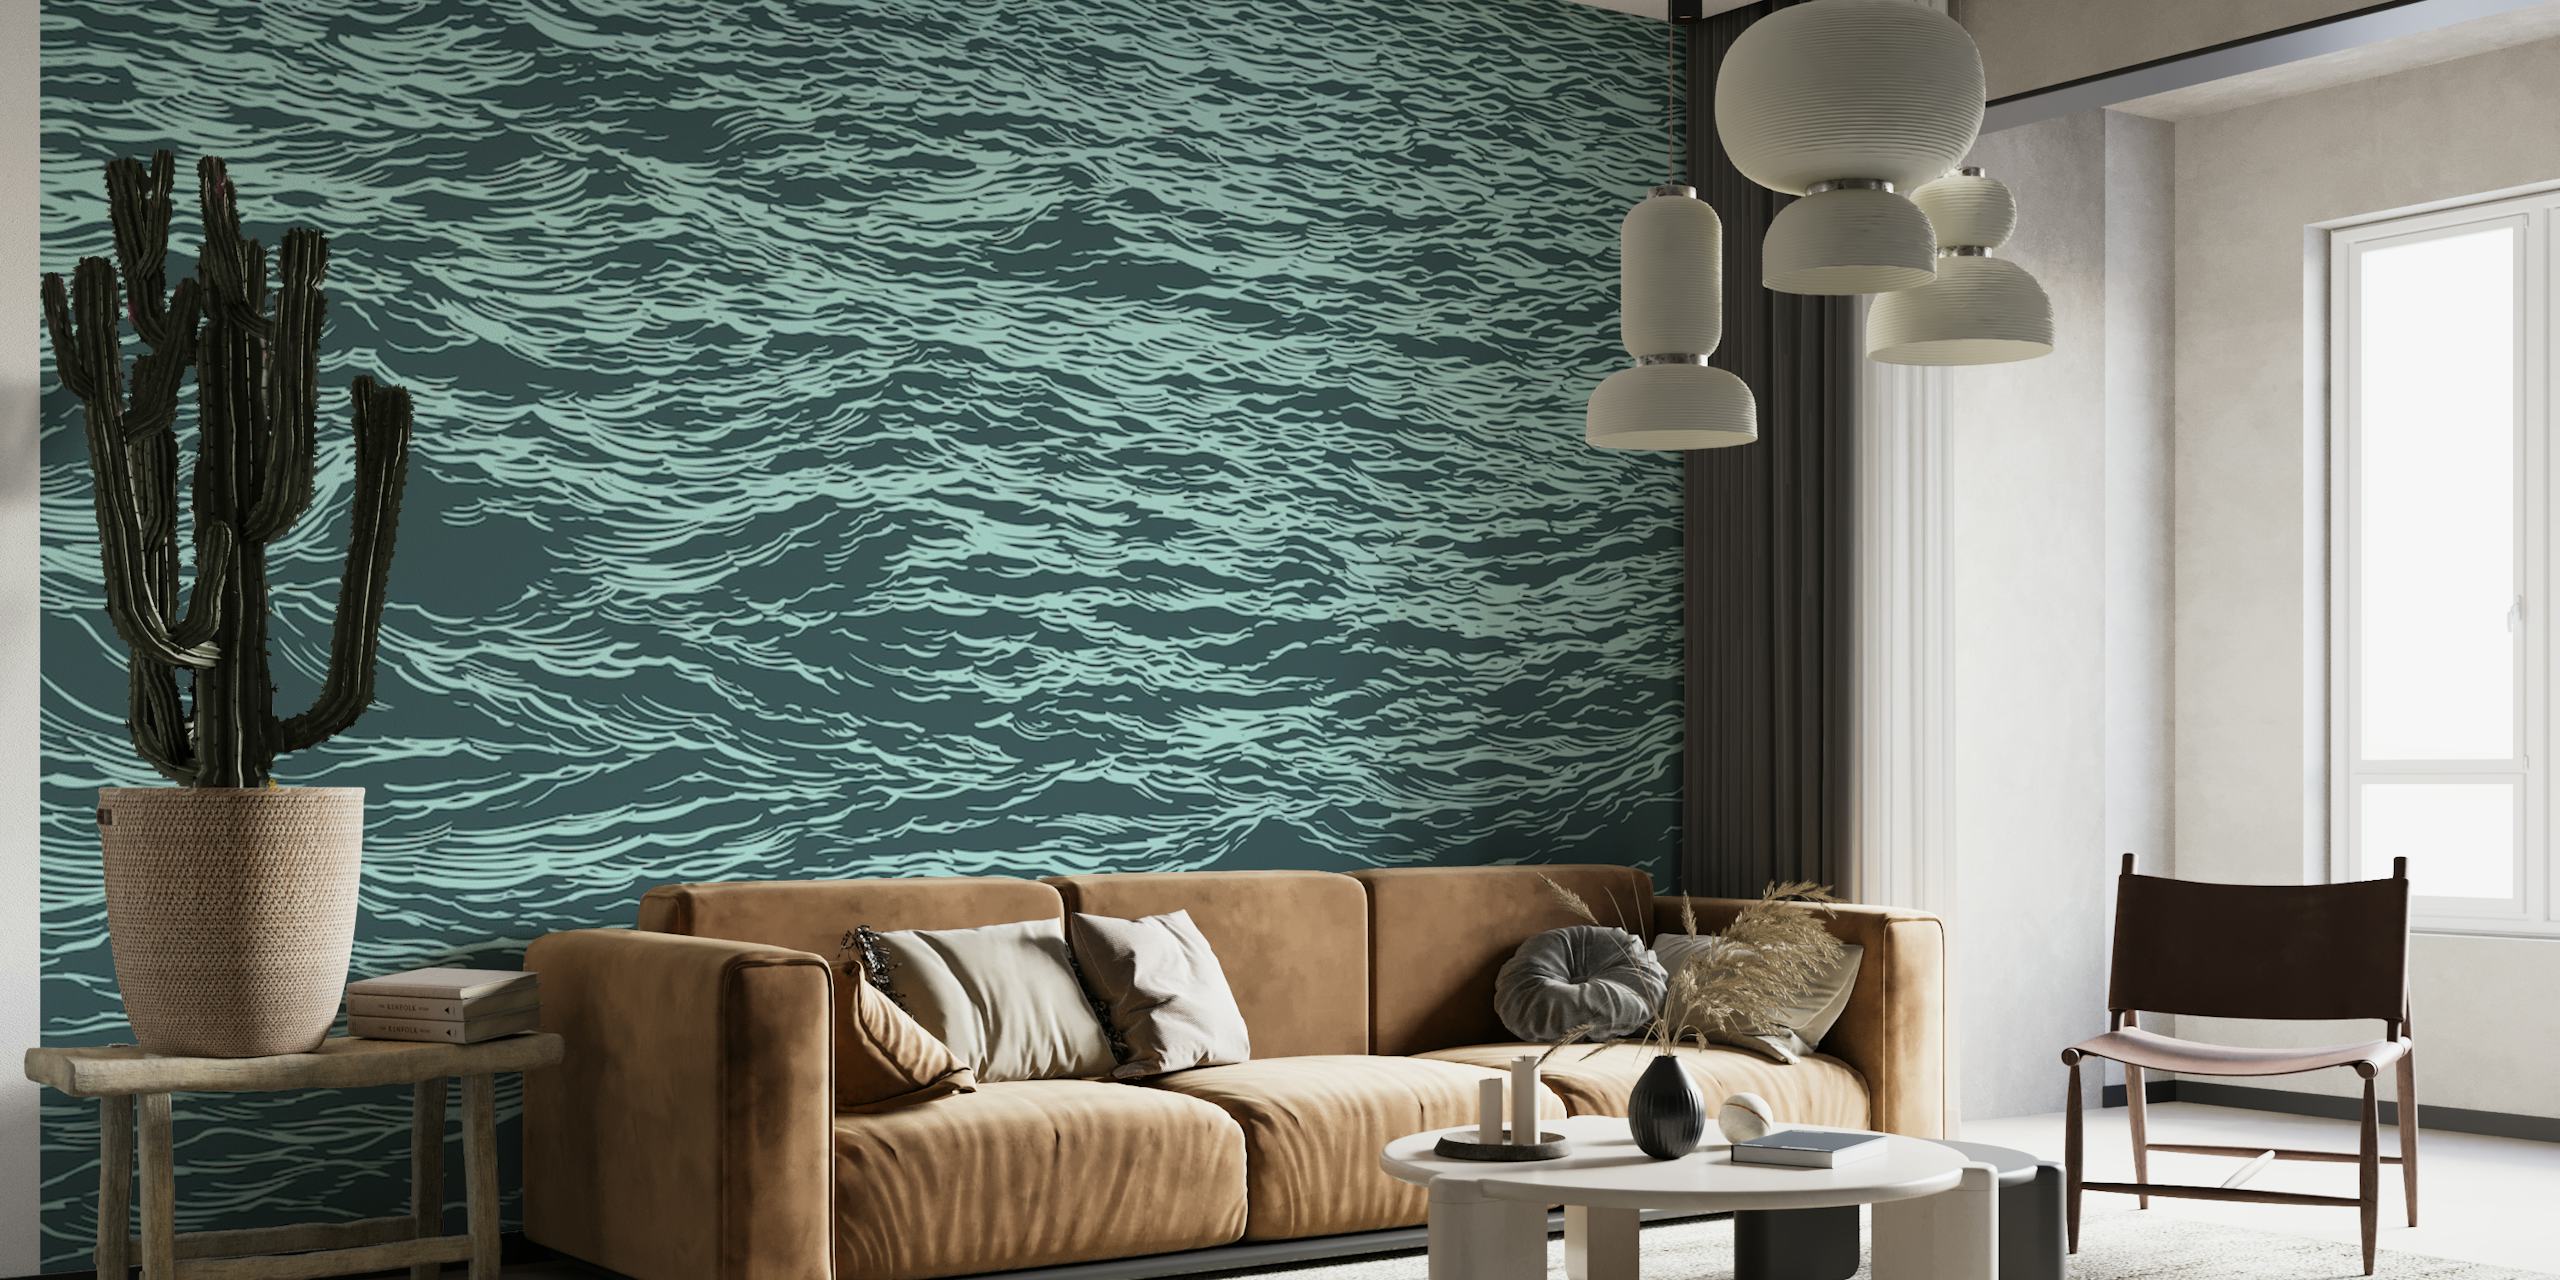 Sea surface wallpaper